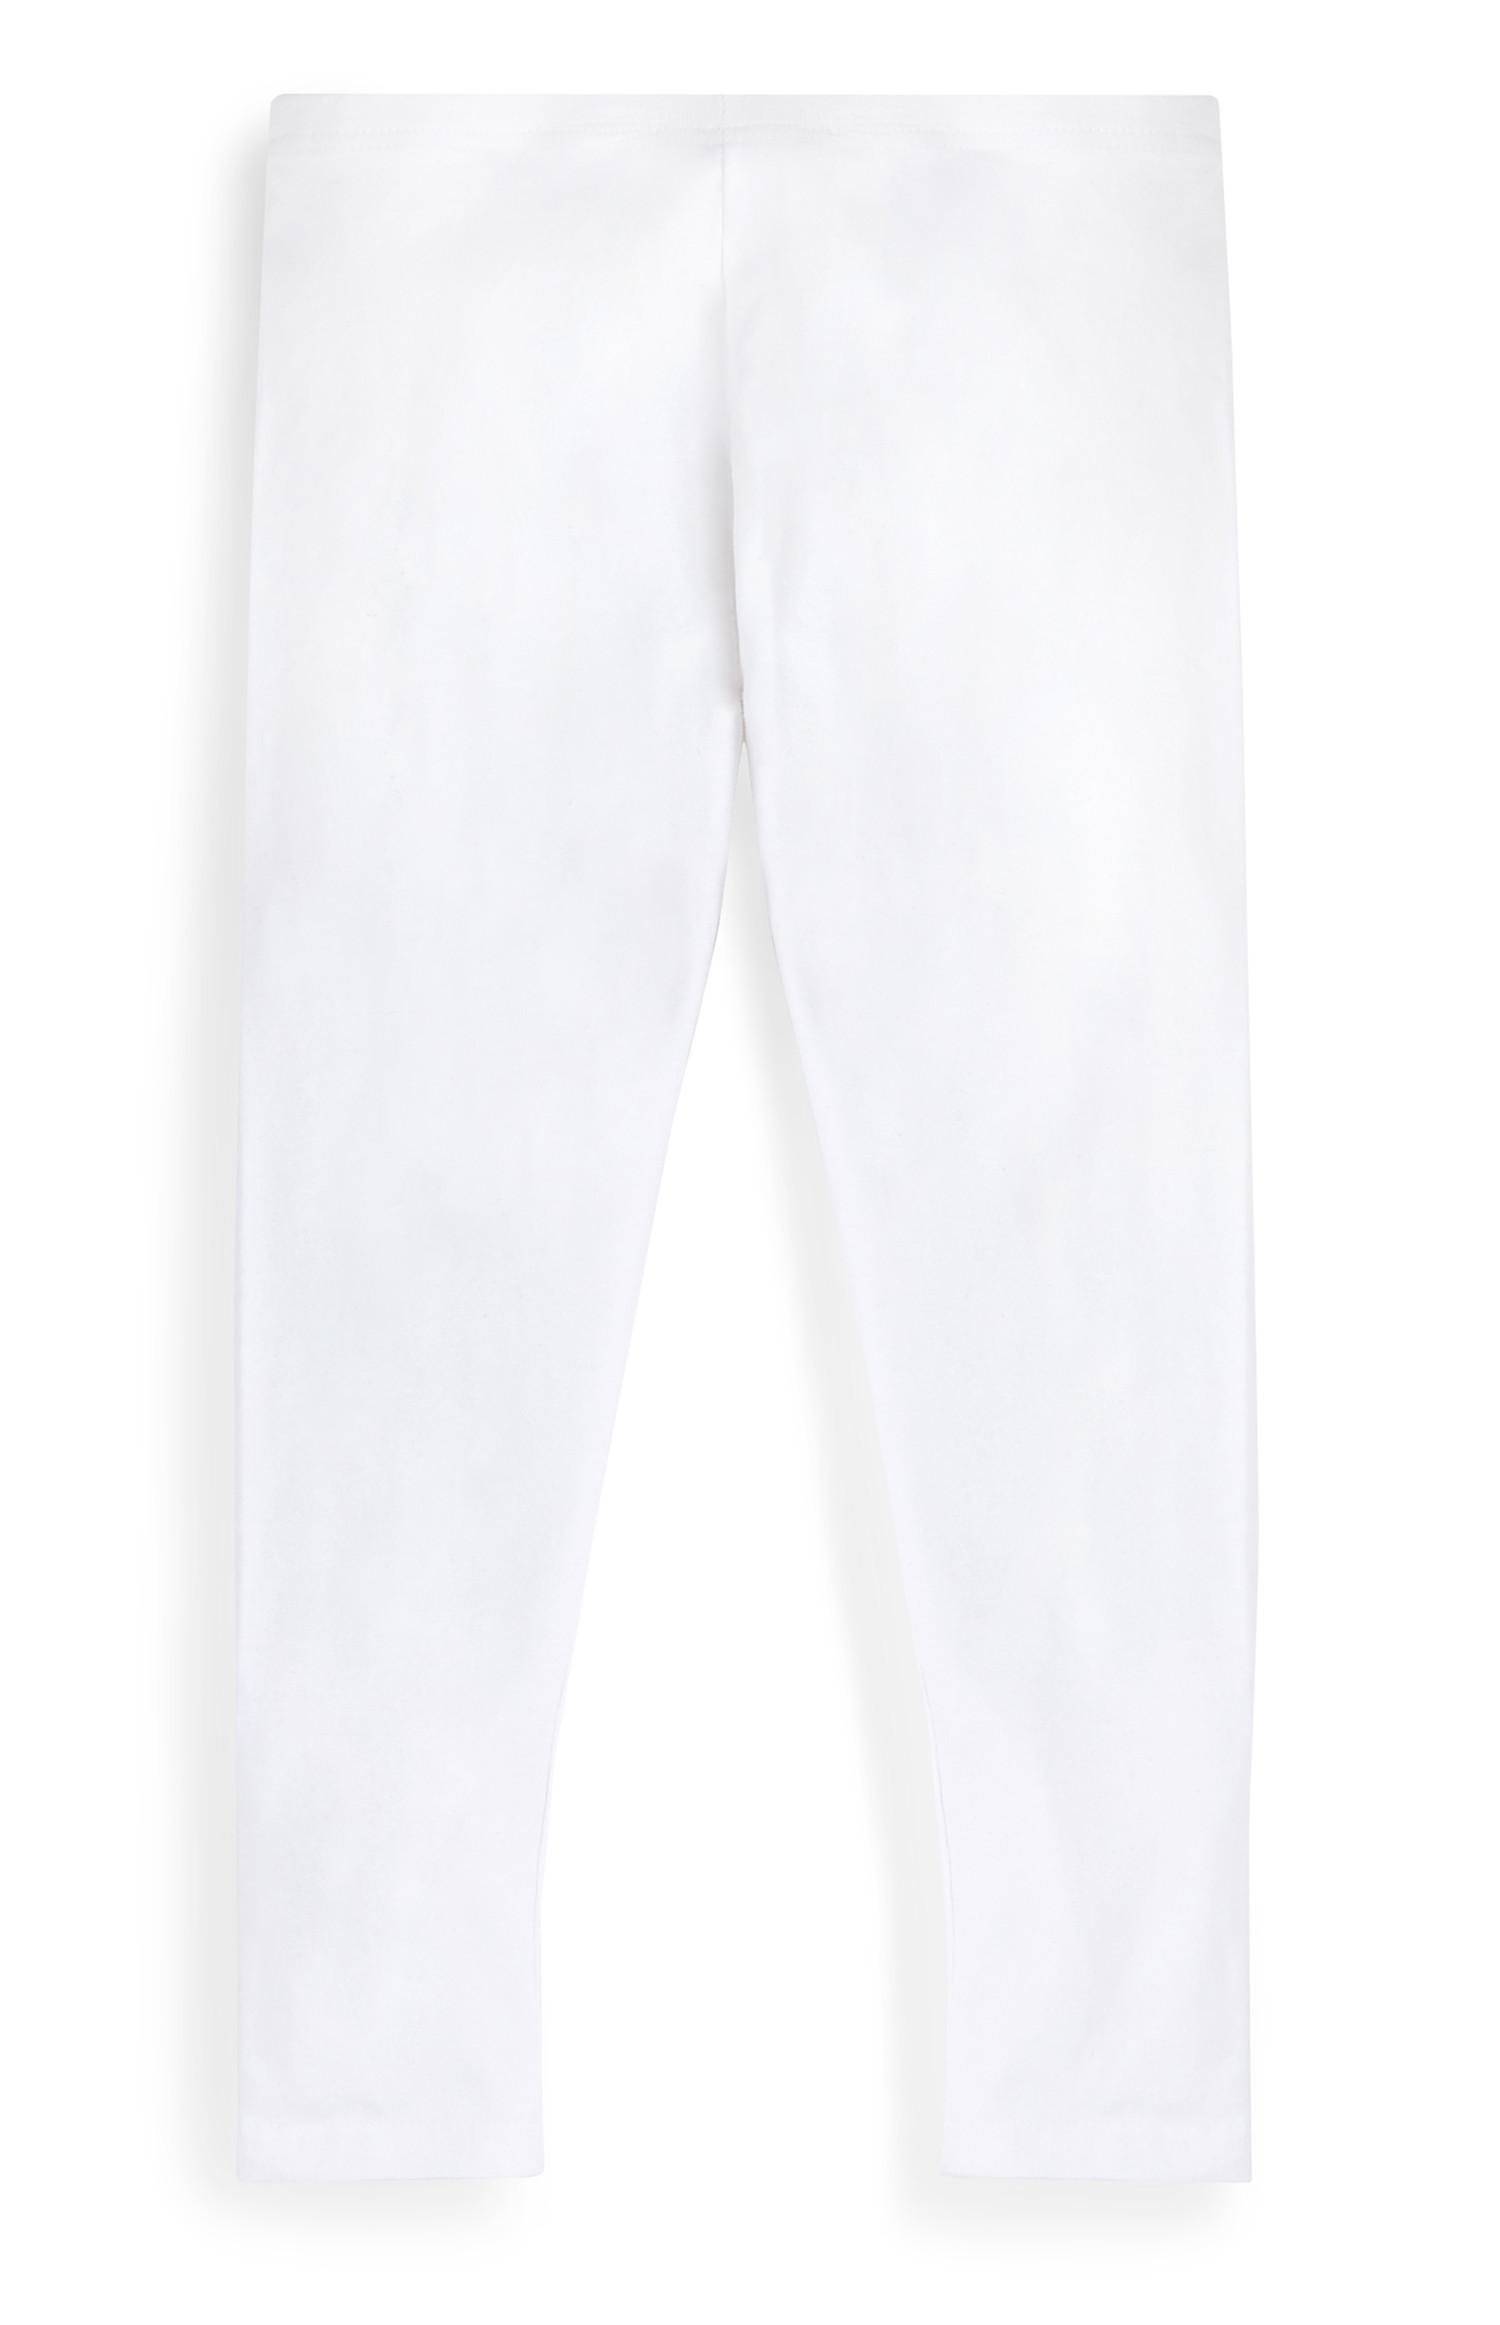 white jeans primark